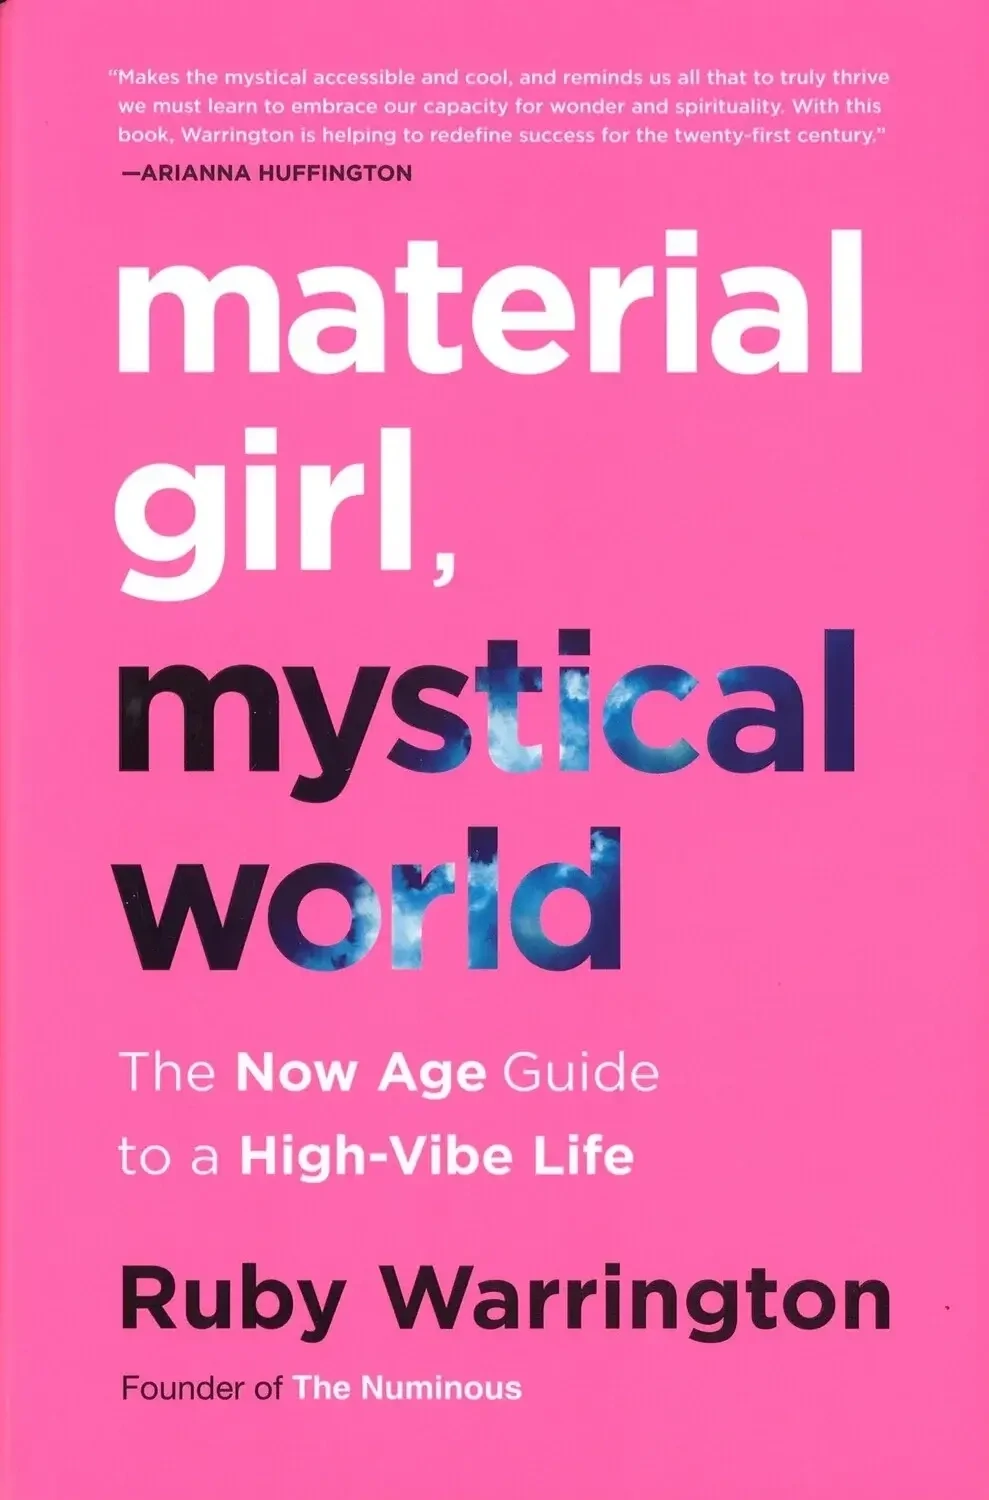 Material Girl, Mystical World by Ruby Warrington